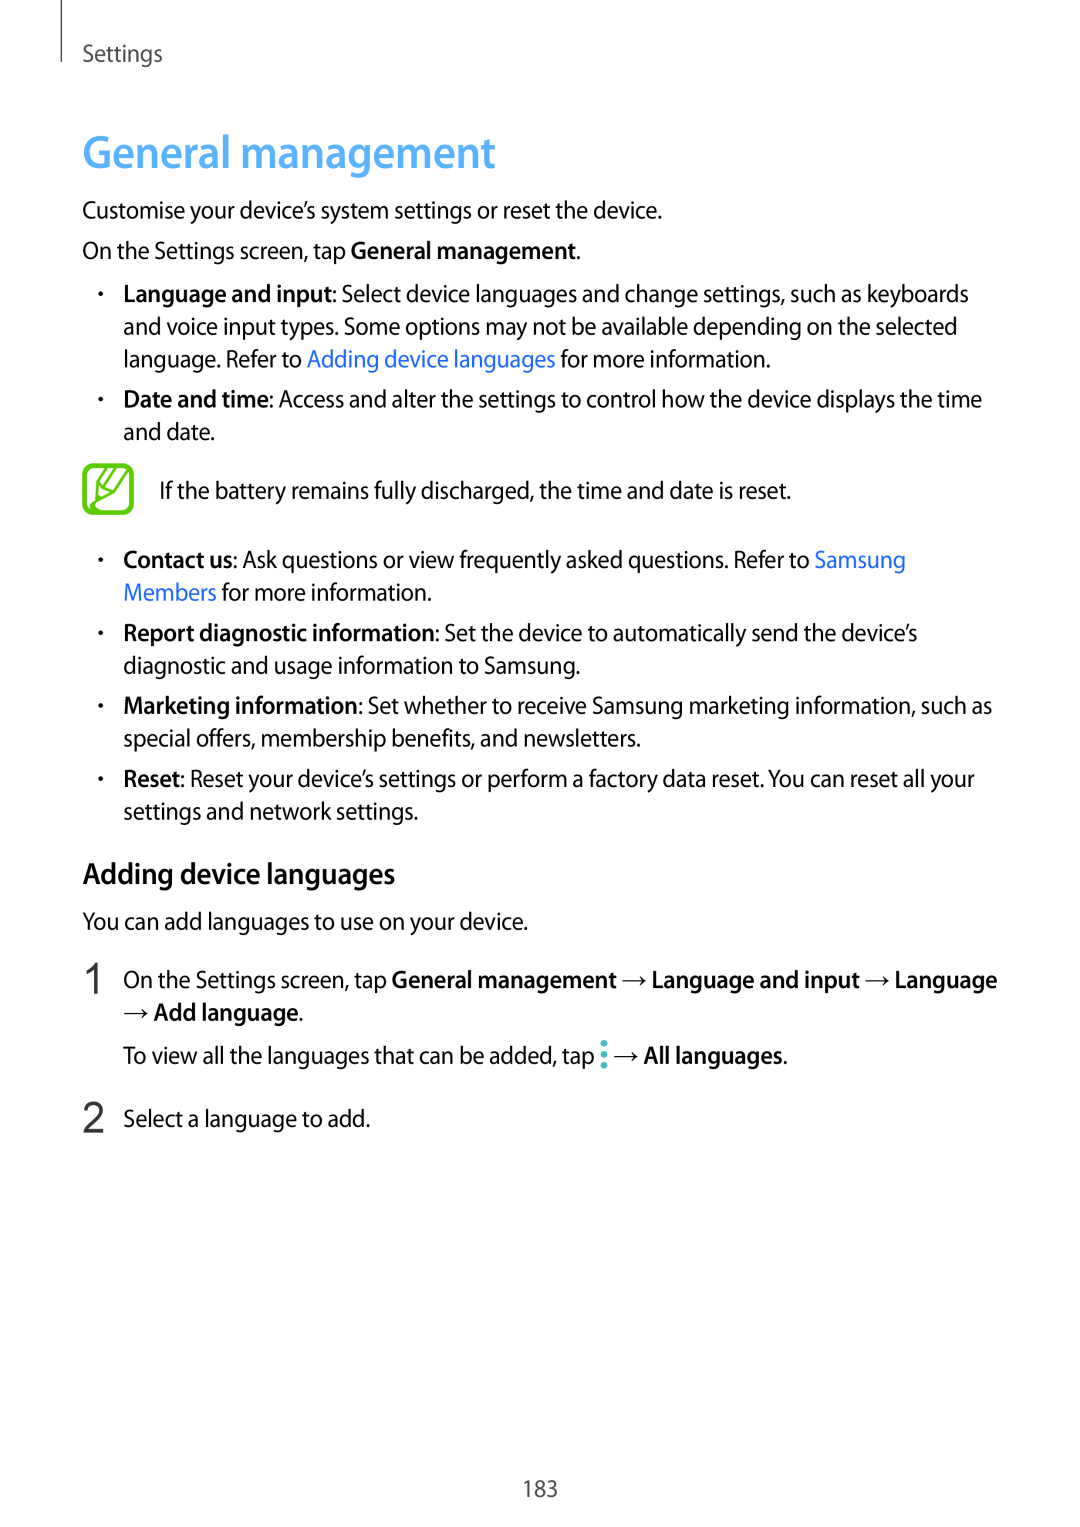 Samsung SM-A530FZVAPAN, SM-A530FZDDXEF manual General management, Adding device languages, → Add language, Settings 